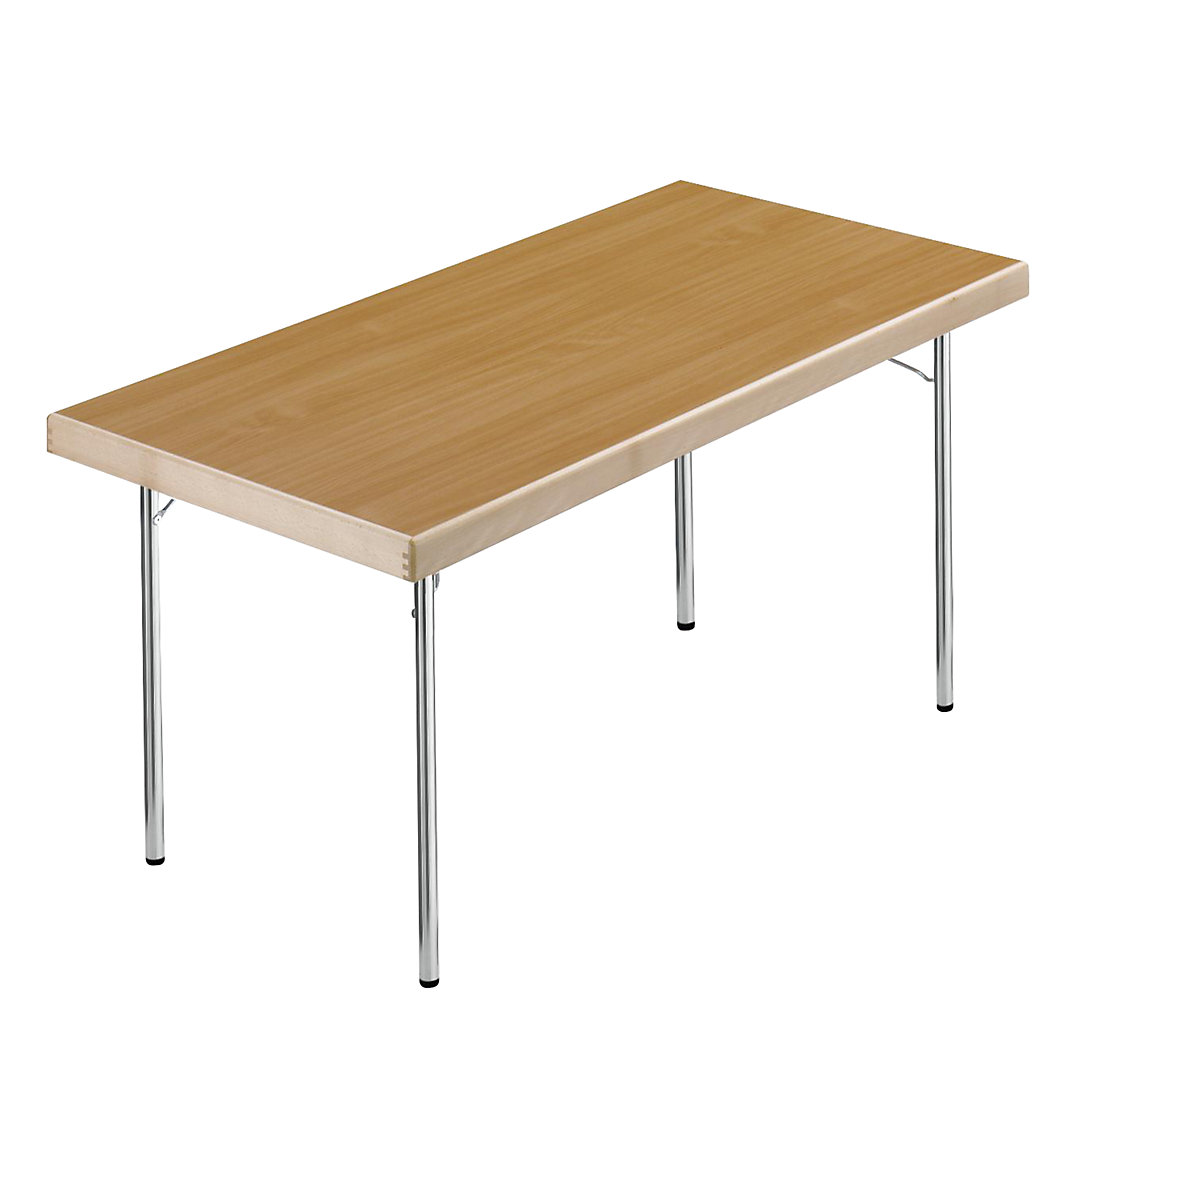 Inklapbare tafel, 4 voetsframe, 1500 x 800 mm, frame verchroomd, blad beukenhoutdecor-6